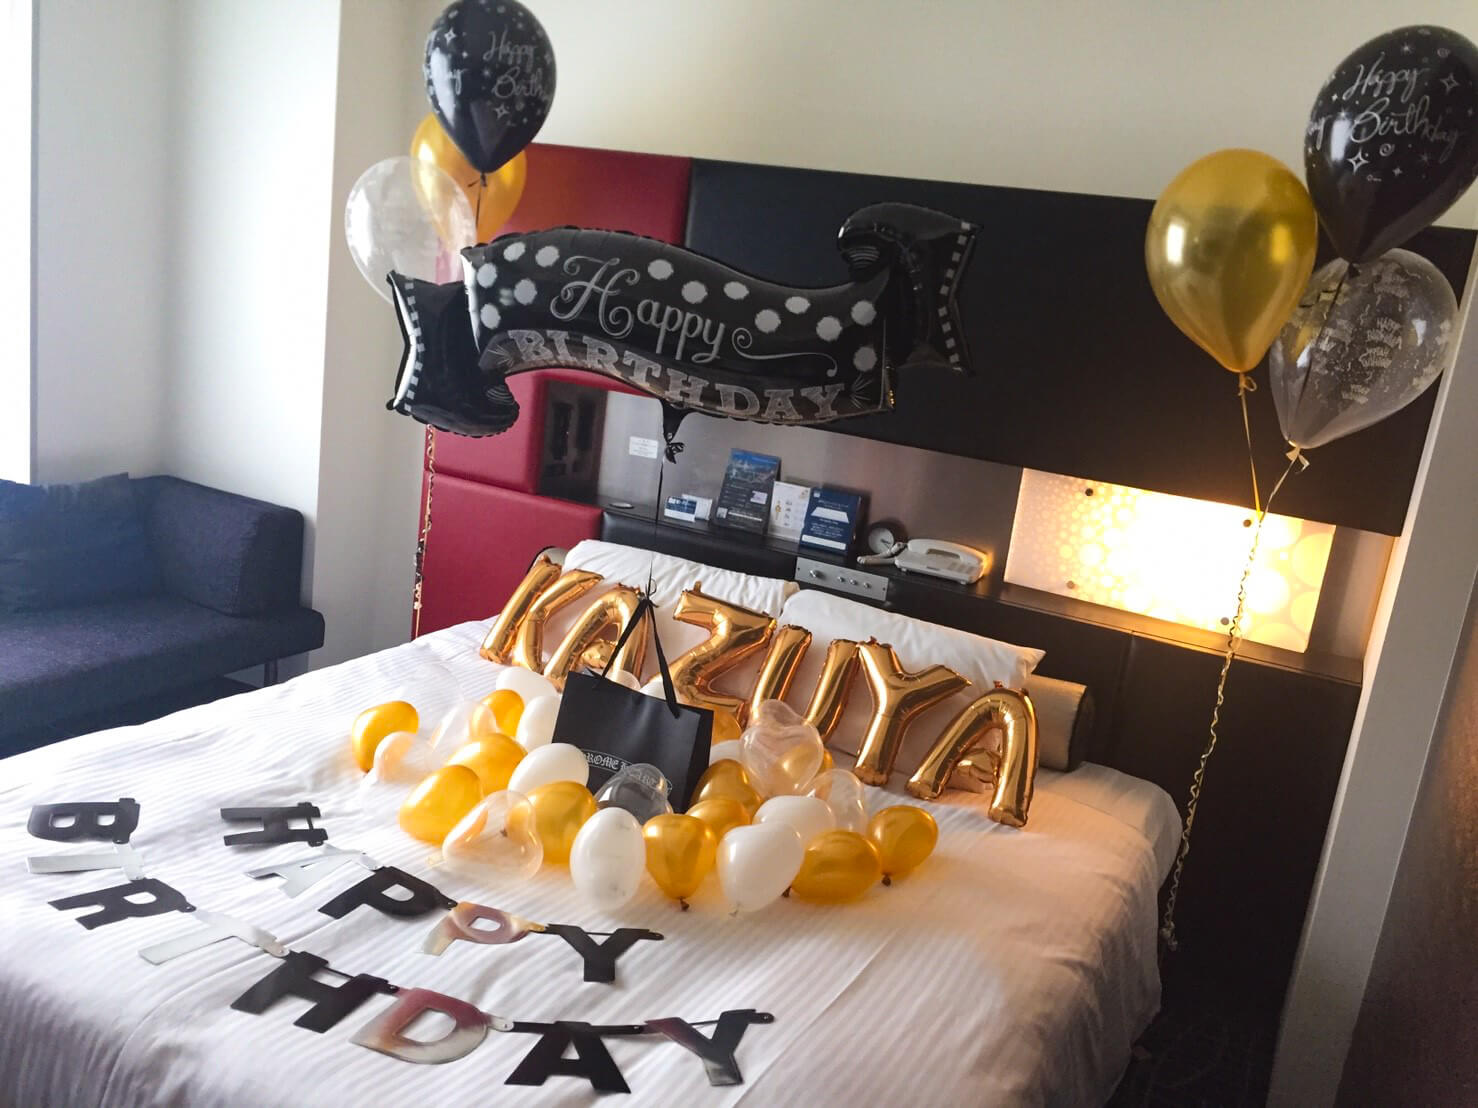 H 12 彼氏へ贈るホテルサプライズ バルーン出張装飾 ホテルサプライズ 誕生日やプロポーズはアニプラバルーン